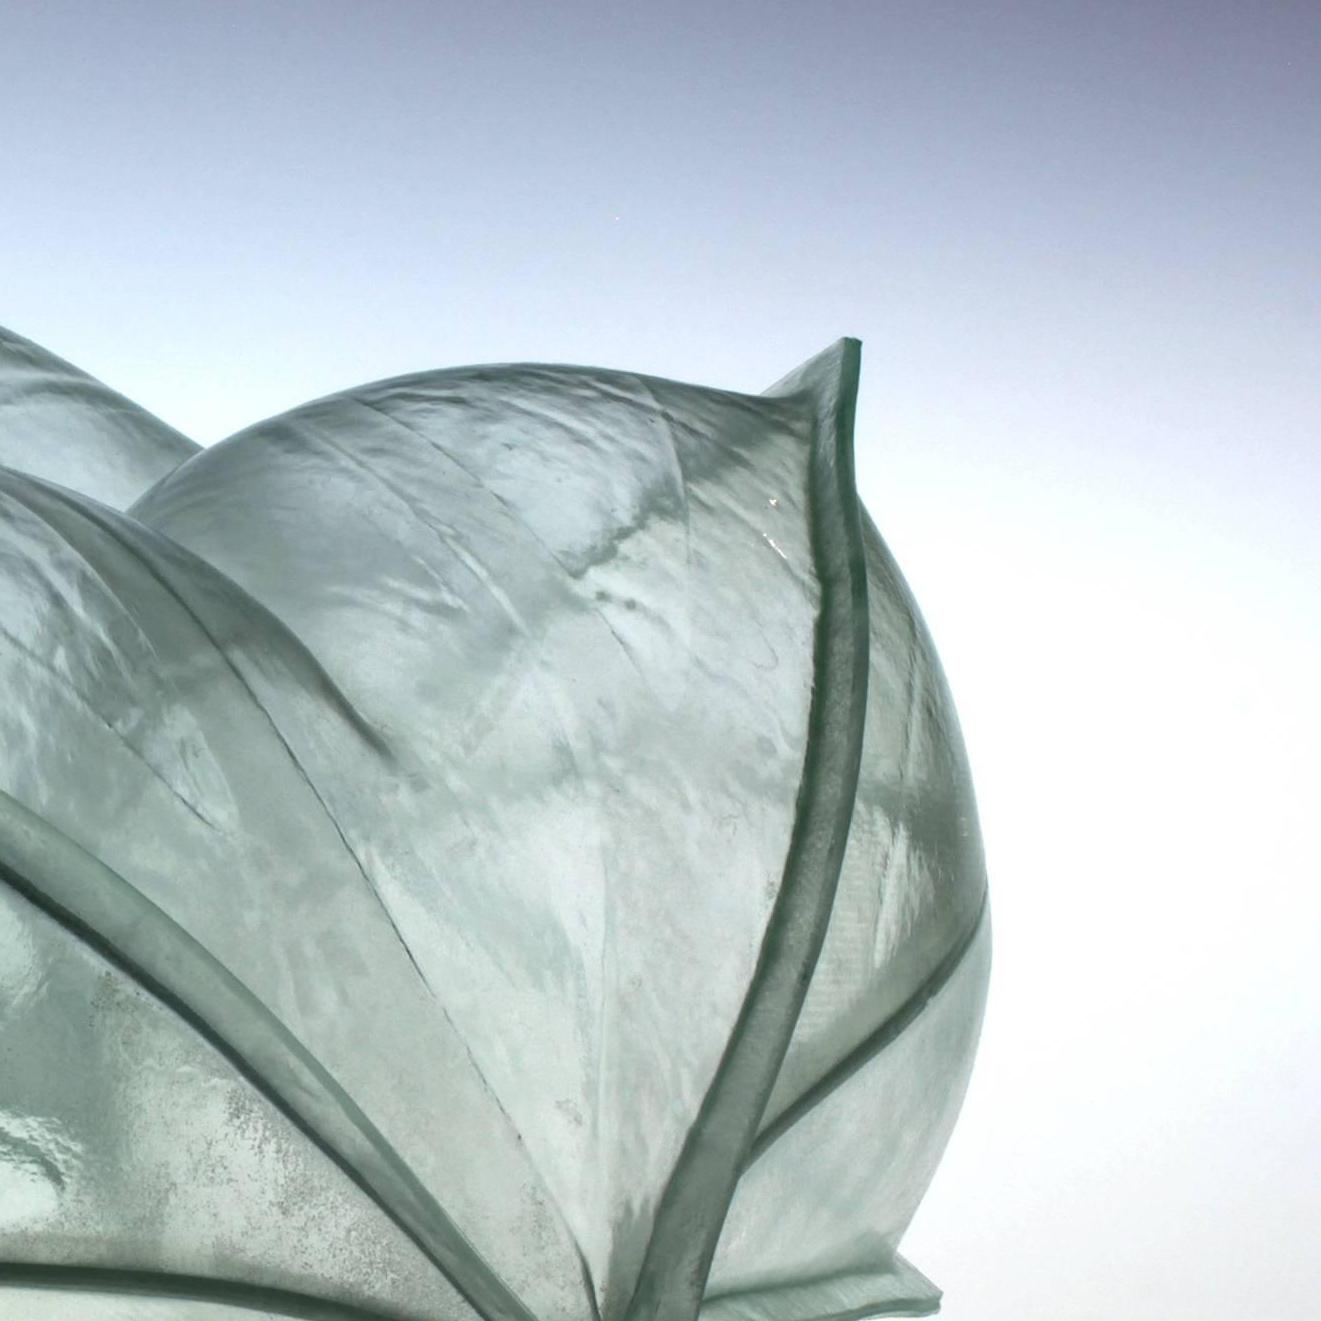  Matthew Szösz, untitled (inflatable) no. 82, 2018, glass - Contemporary Sculpture by Matthew Szosz